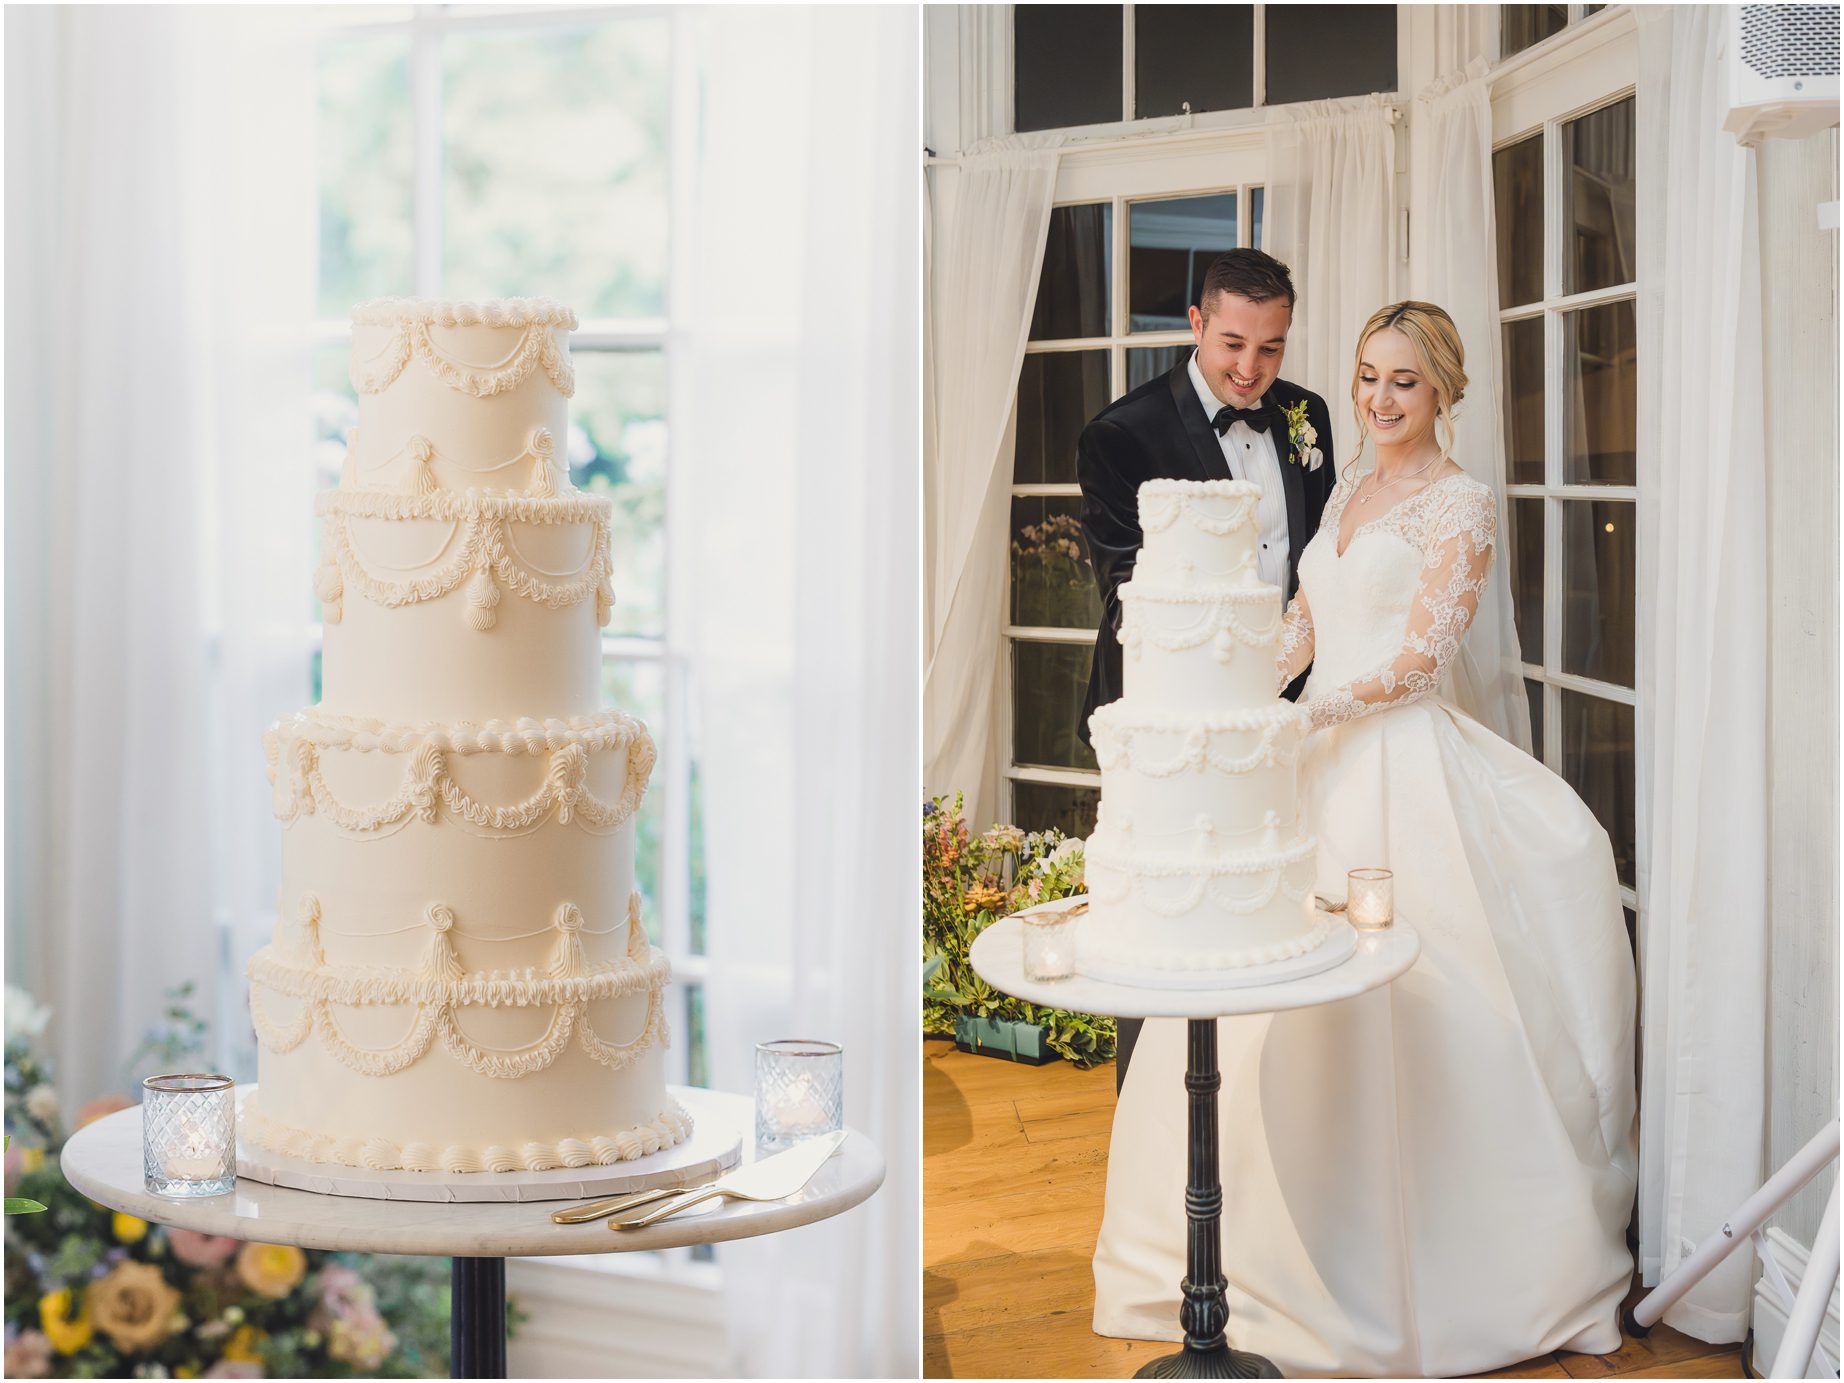 A bride and groom cut their elegant cake at the lodge at Malibou Lake